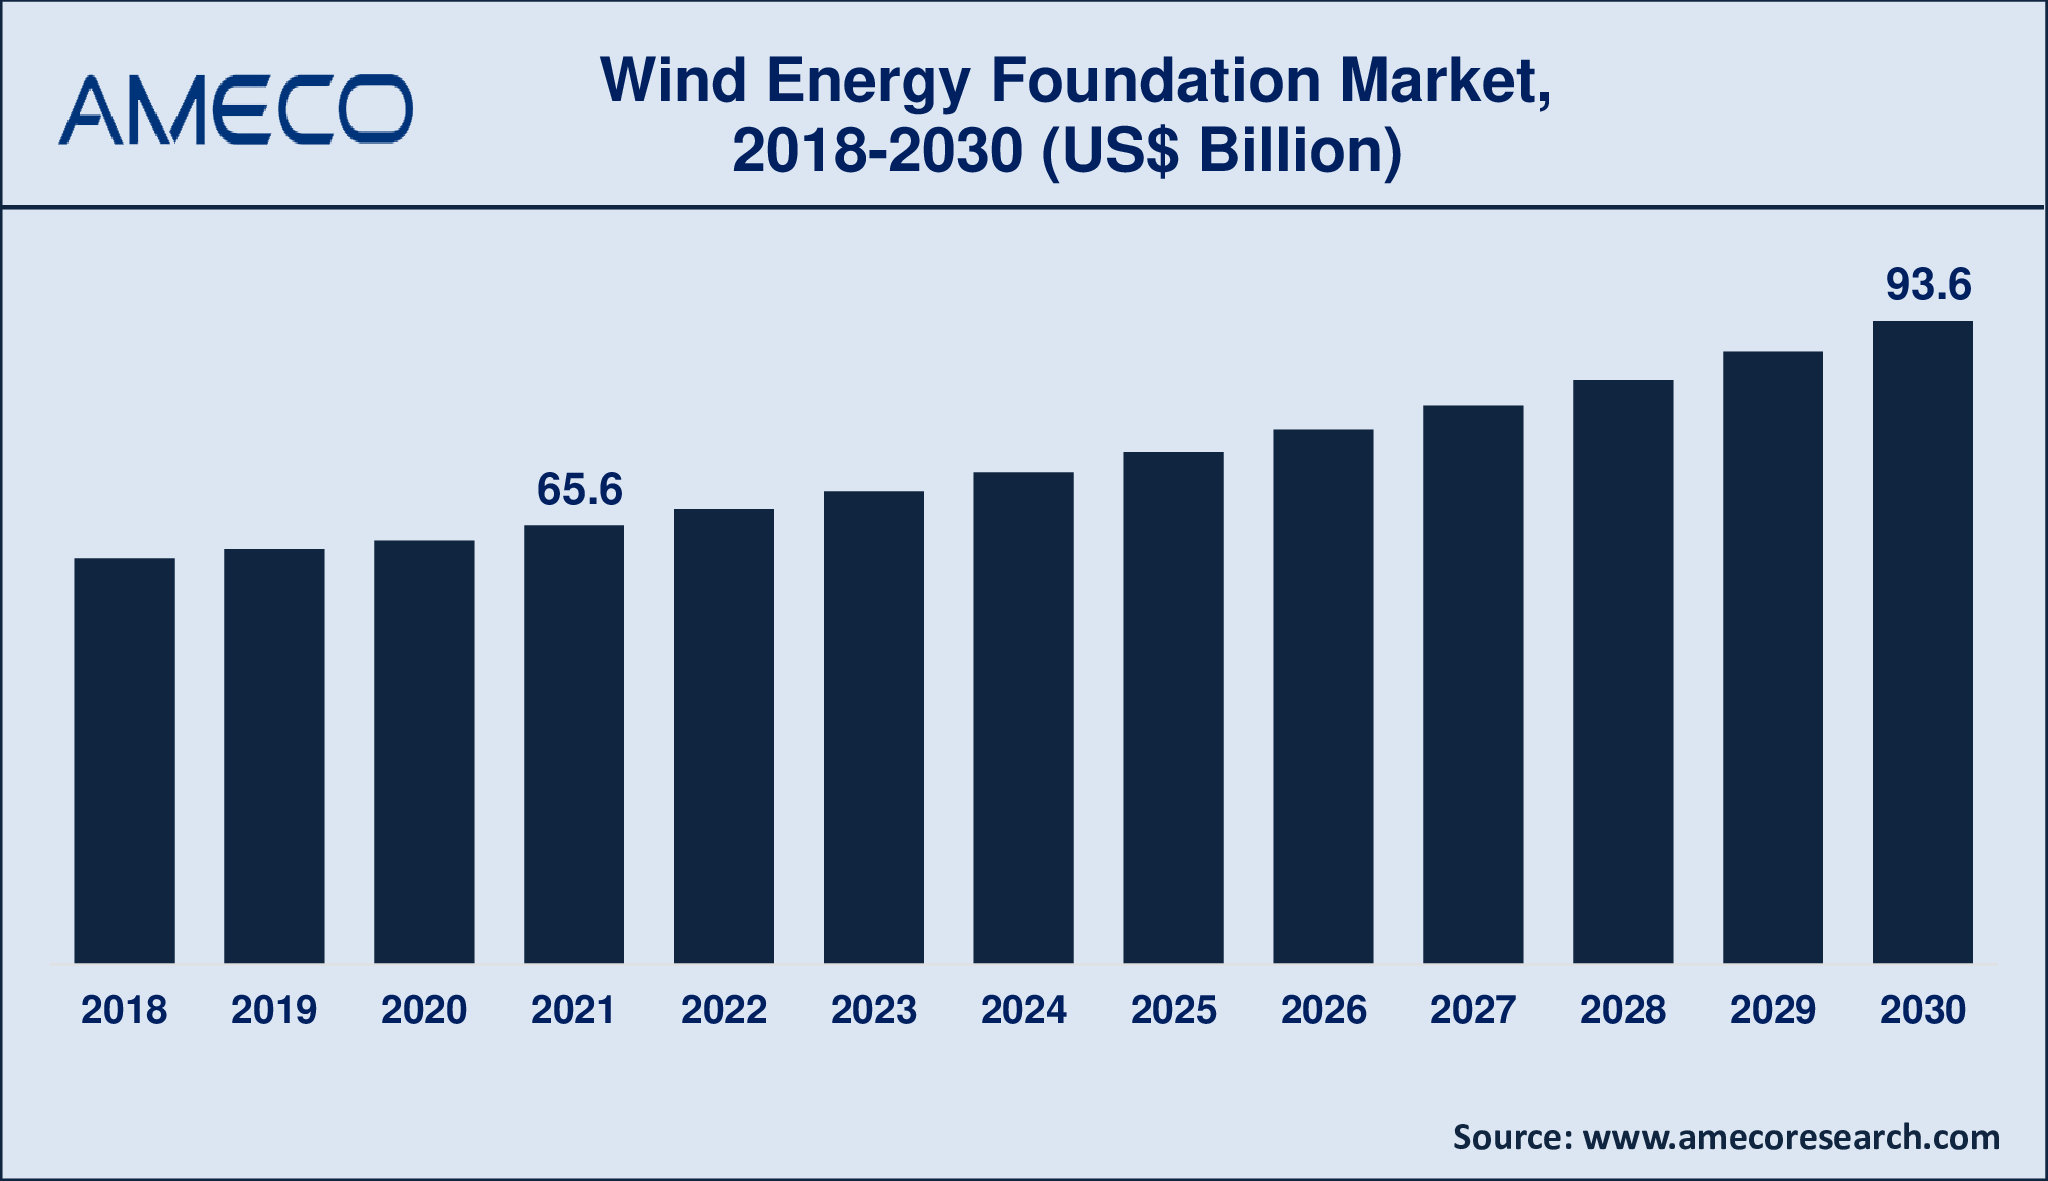 Wind Energy Foundation Market Analysis Period